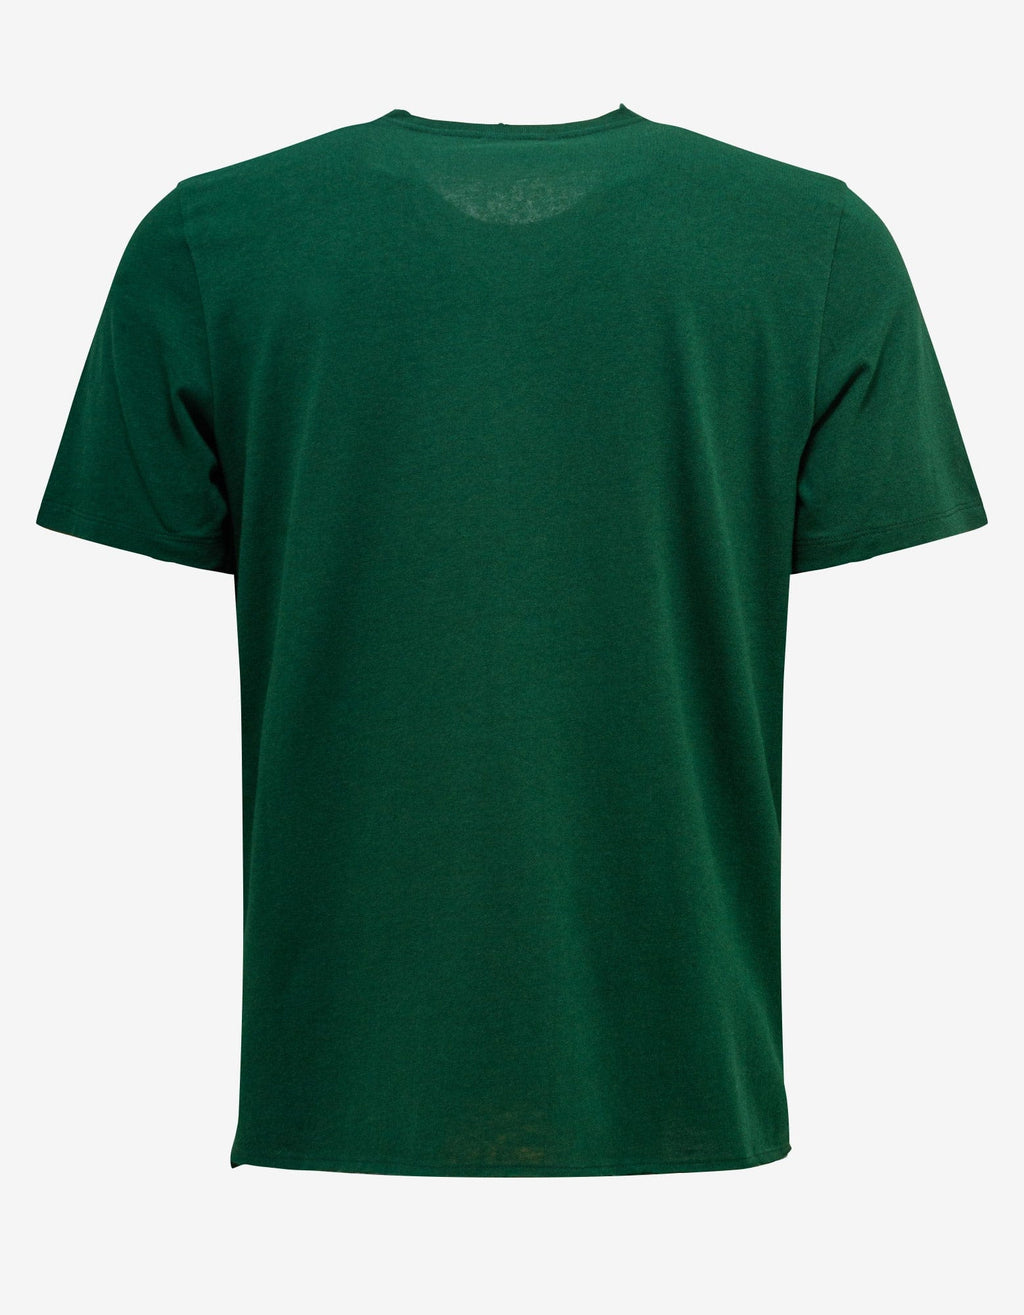 Saint Laurent Green Graphic Print T-Shirt